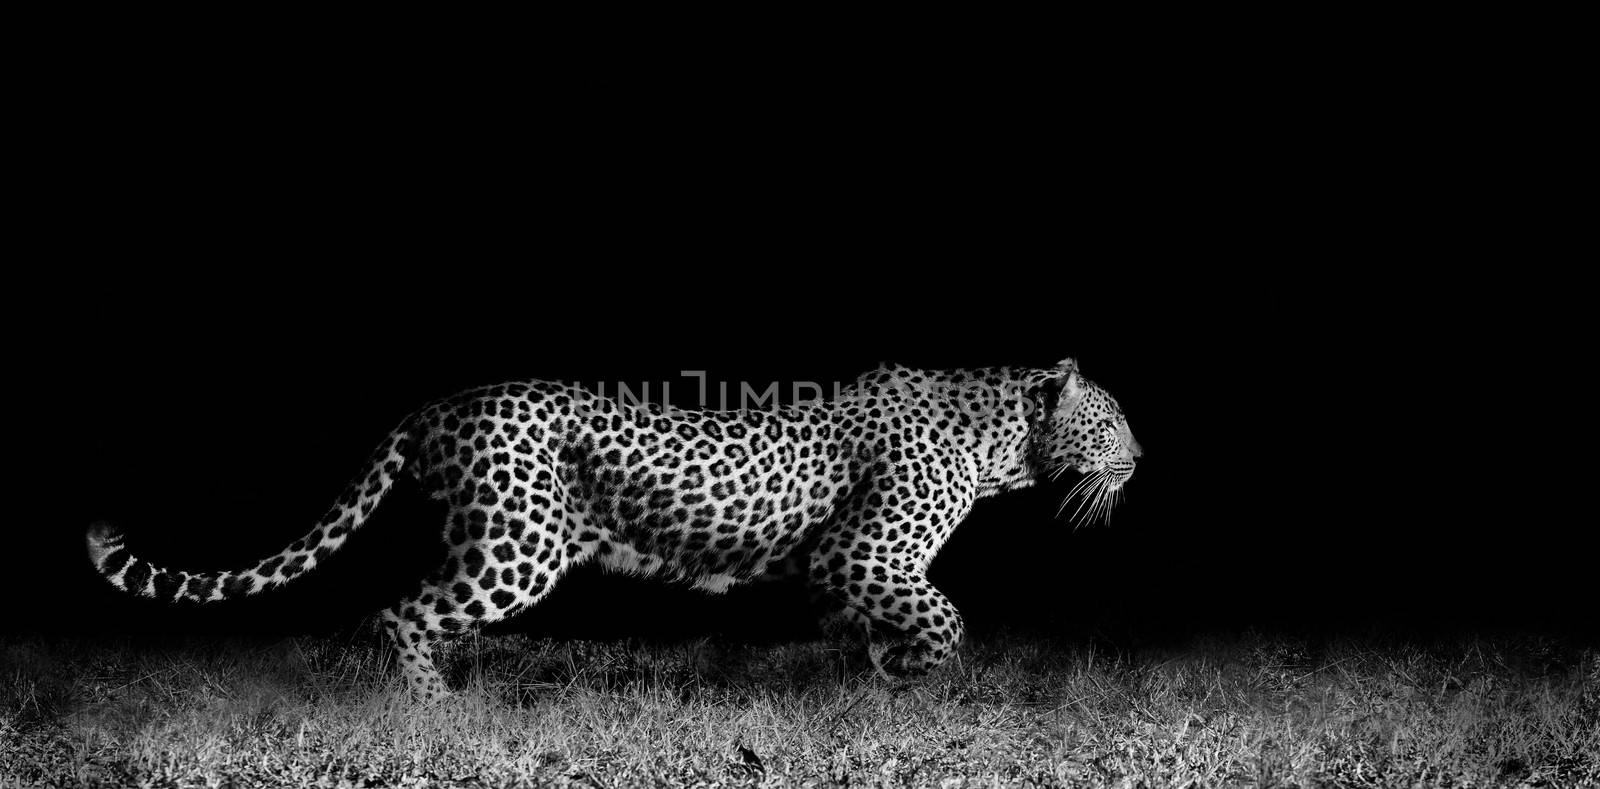 Leopard Running by donvanstaden